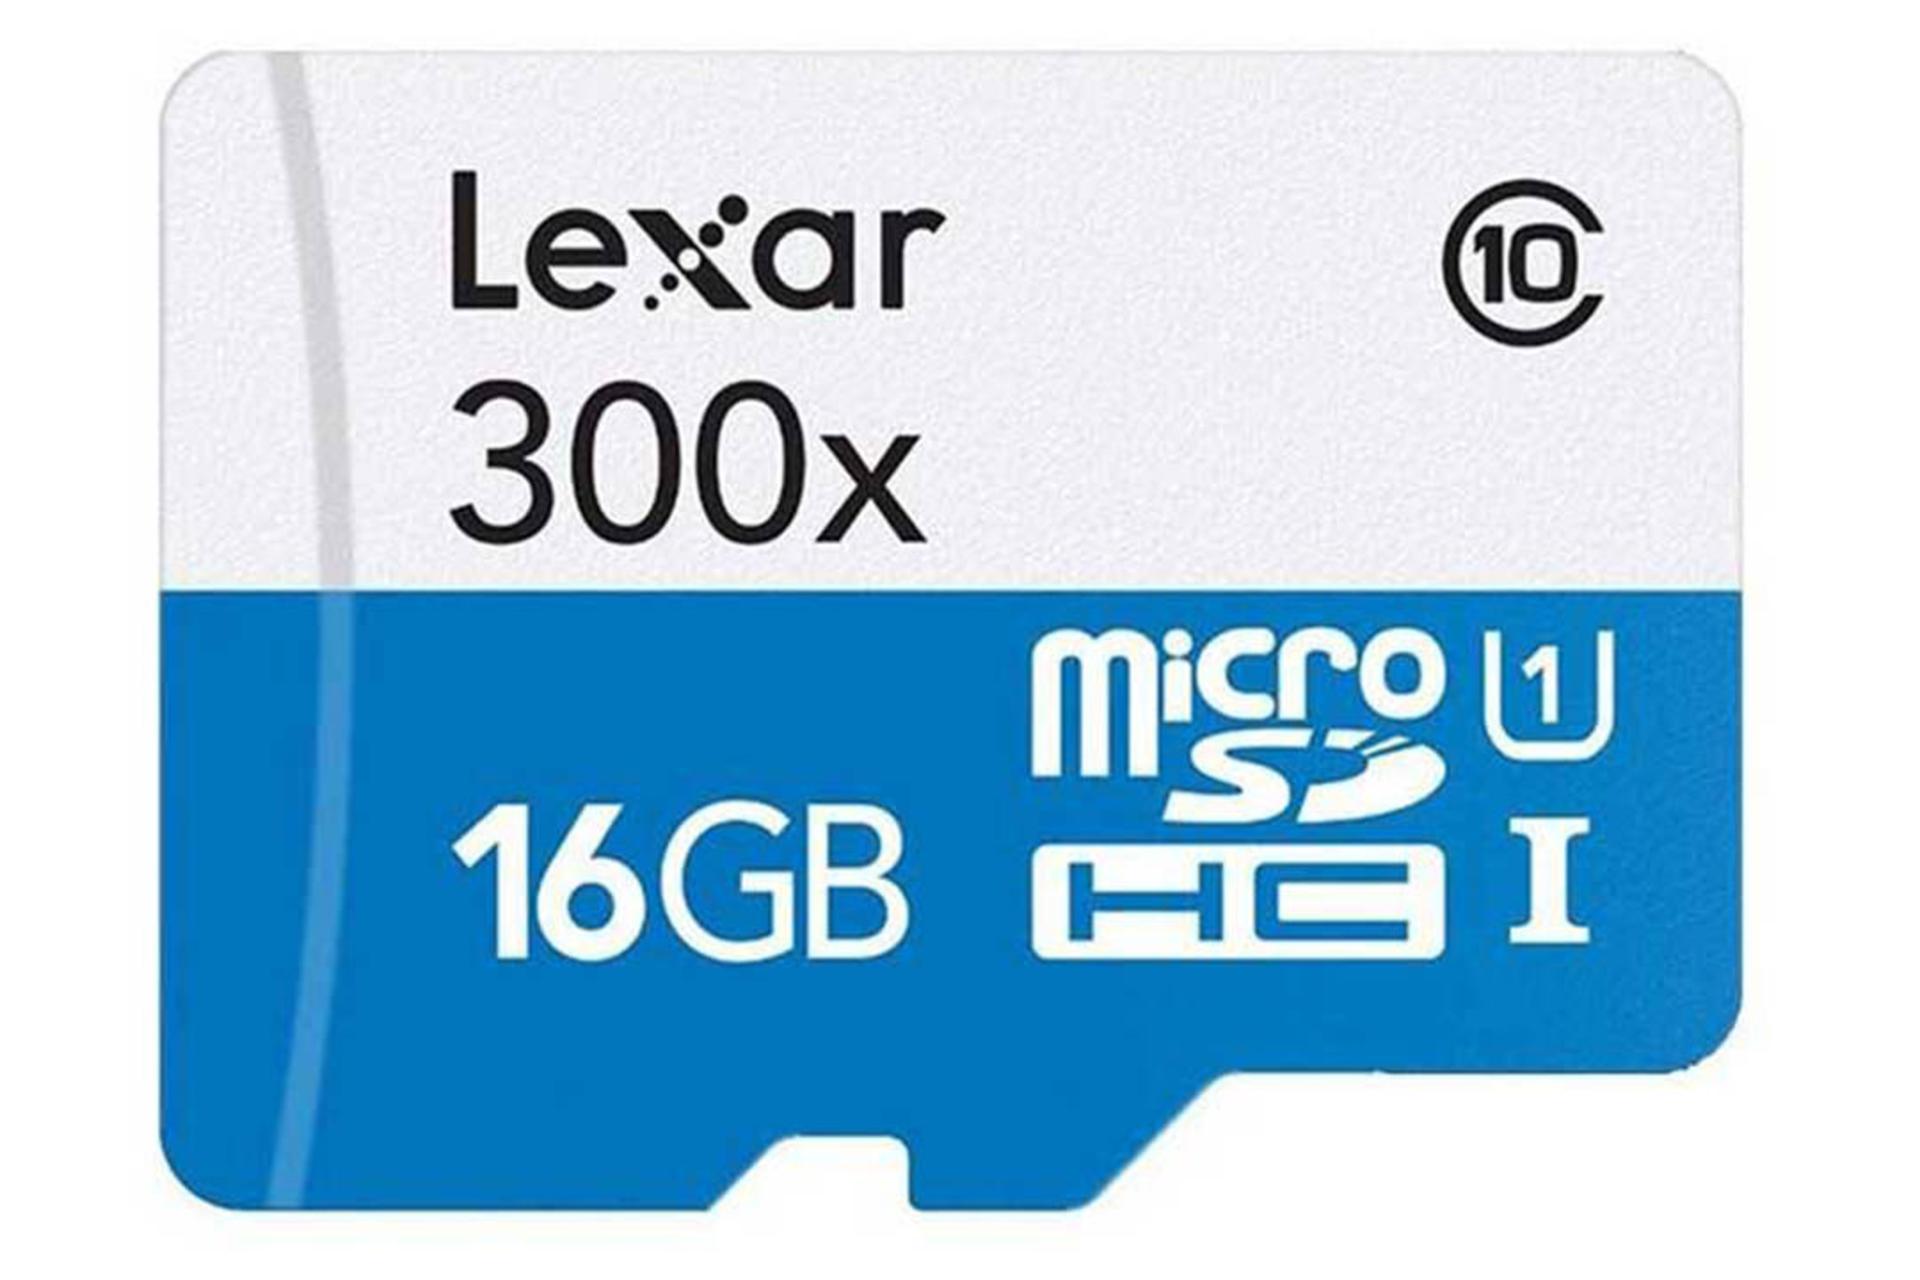 Lexar Professional microSDHC Class 10 UHS-I U1 16GB